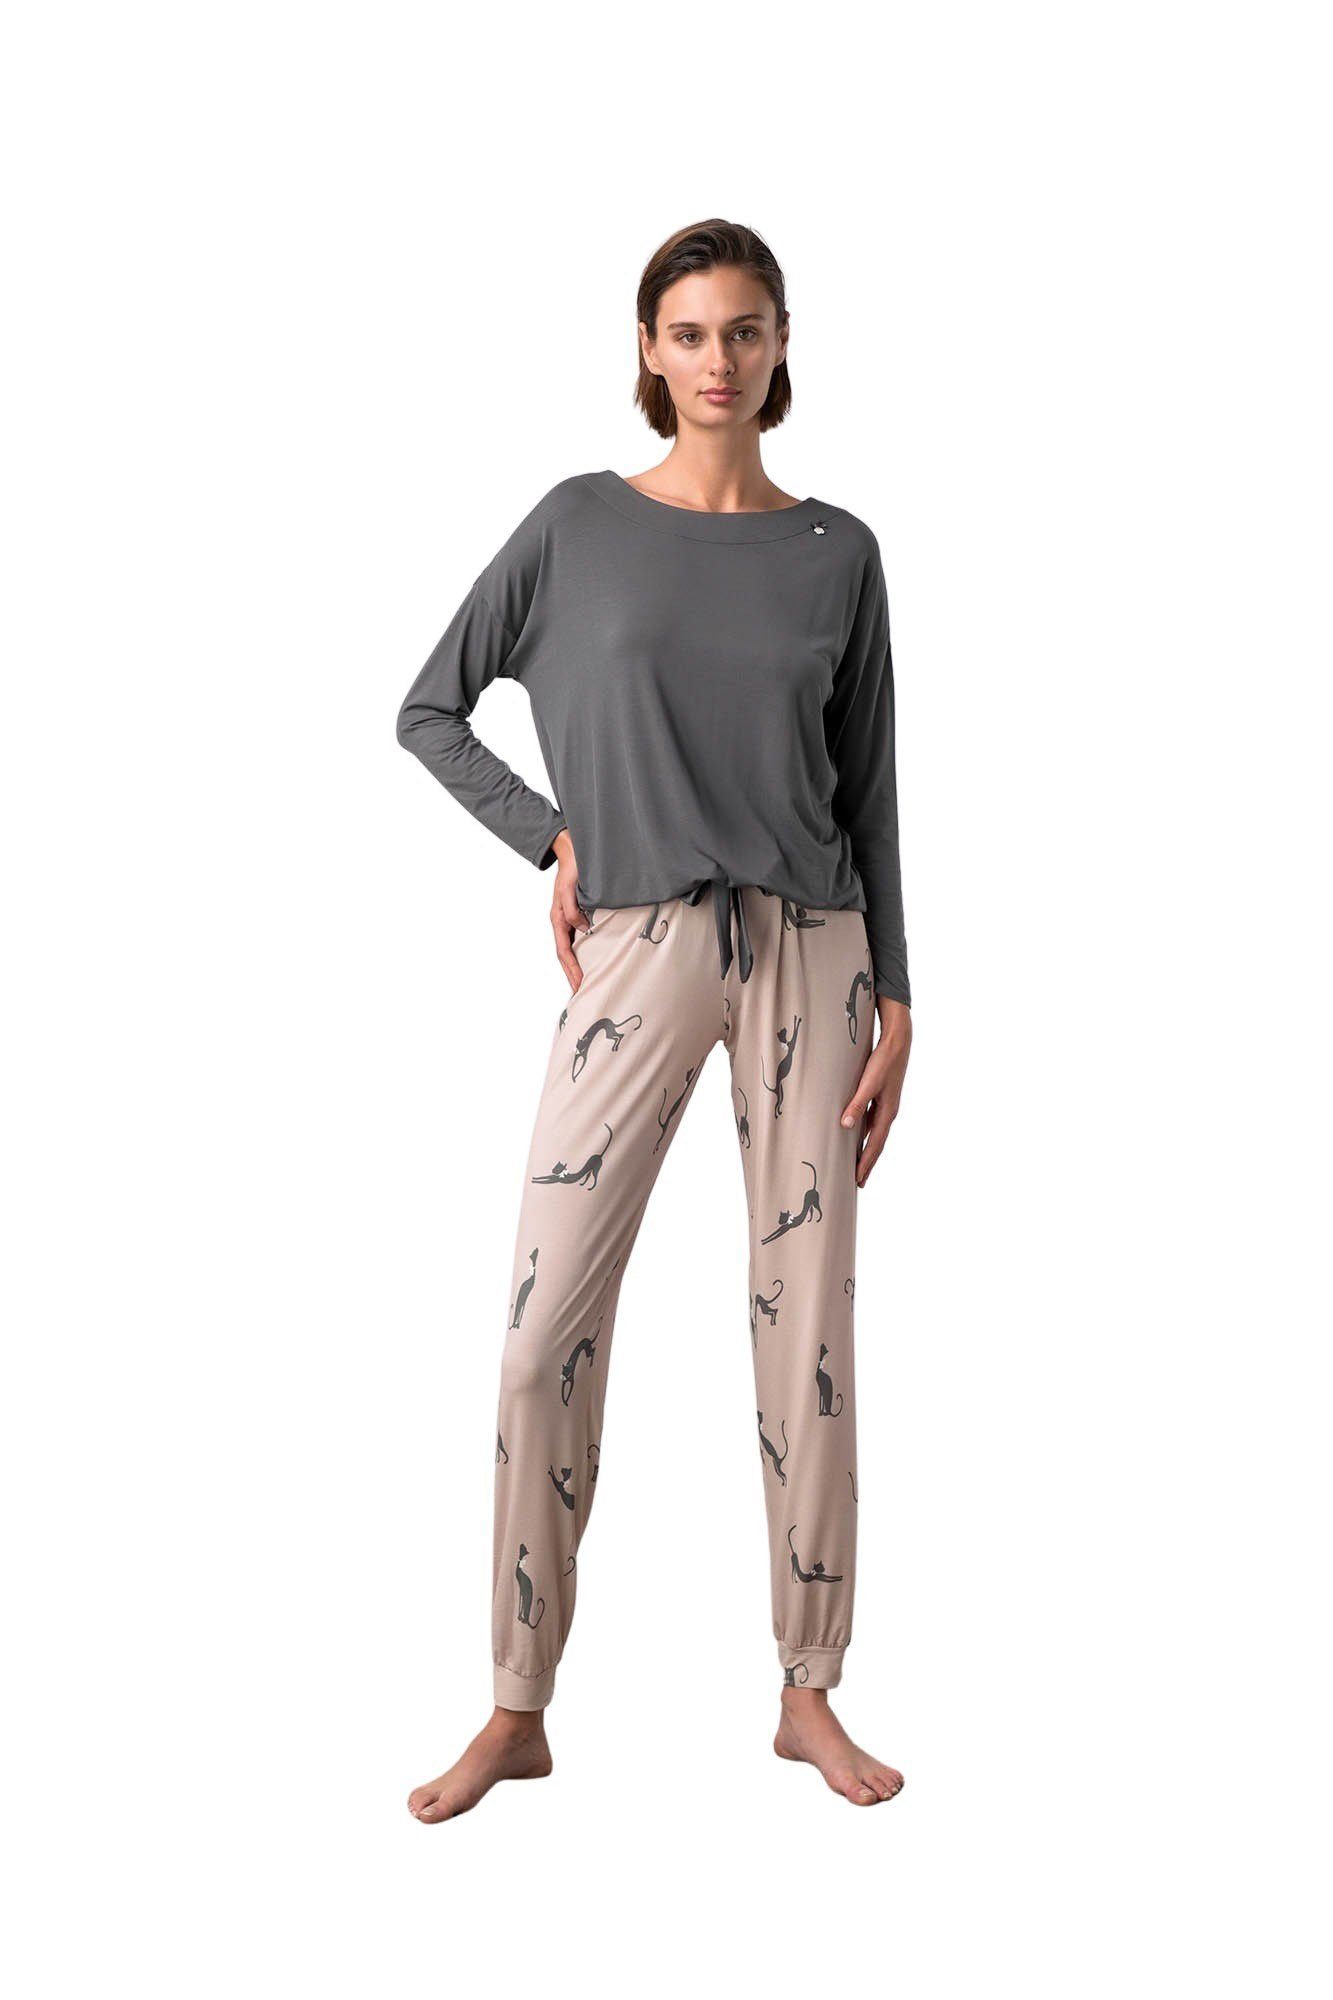 Damen exquisiter Vamp 2-teilig, Langarm, Schlafanzug Pyjama (Set, magnet gray 2 Set) Schlafanzug tlg.,